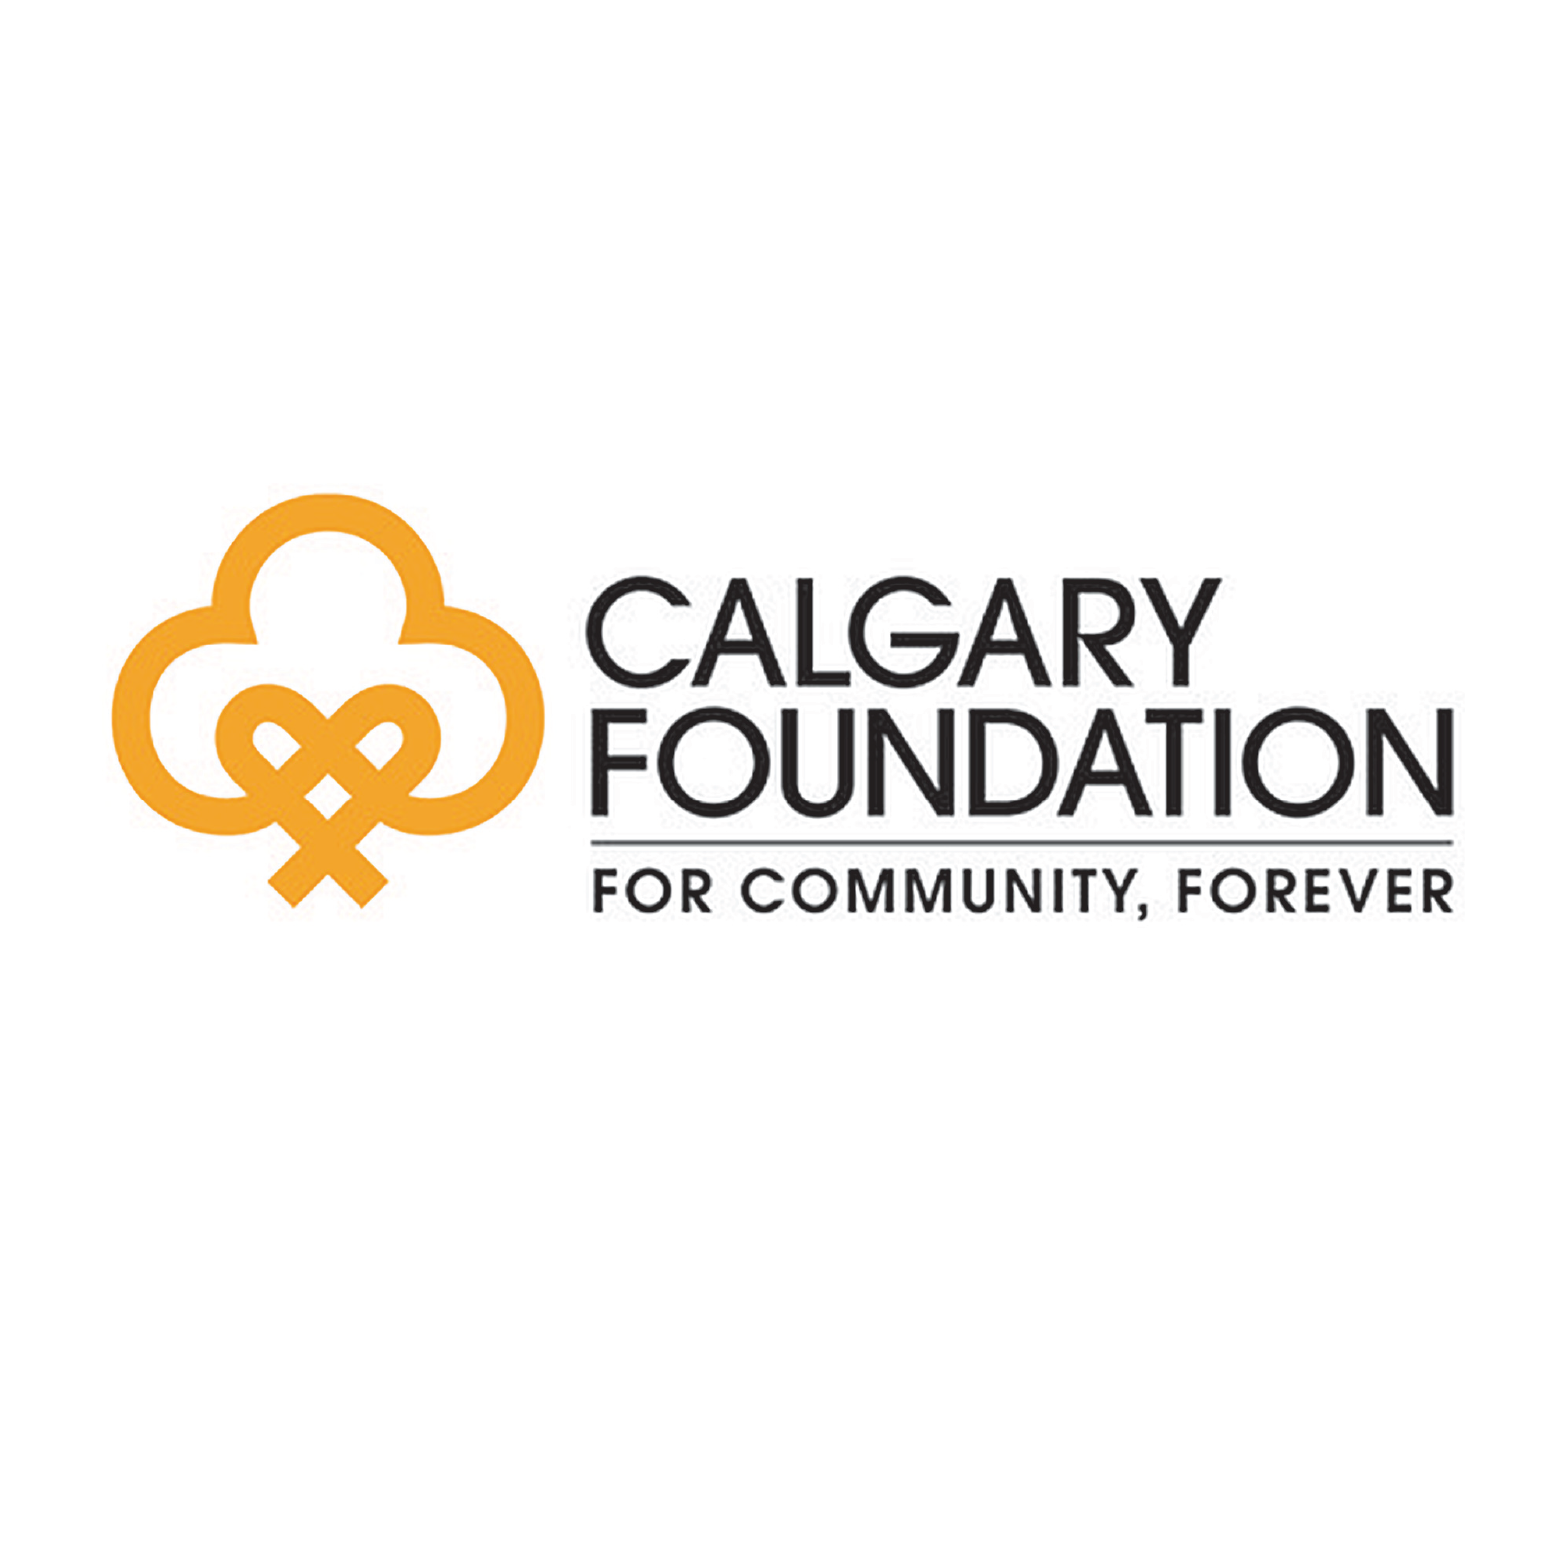 The-Calgary-Foundation-Logo-1.png